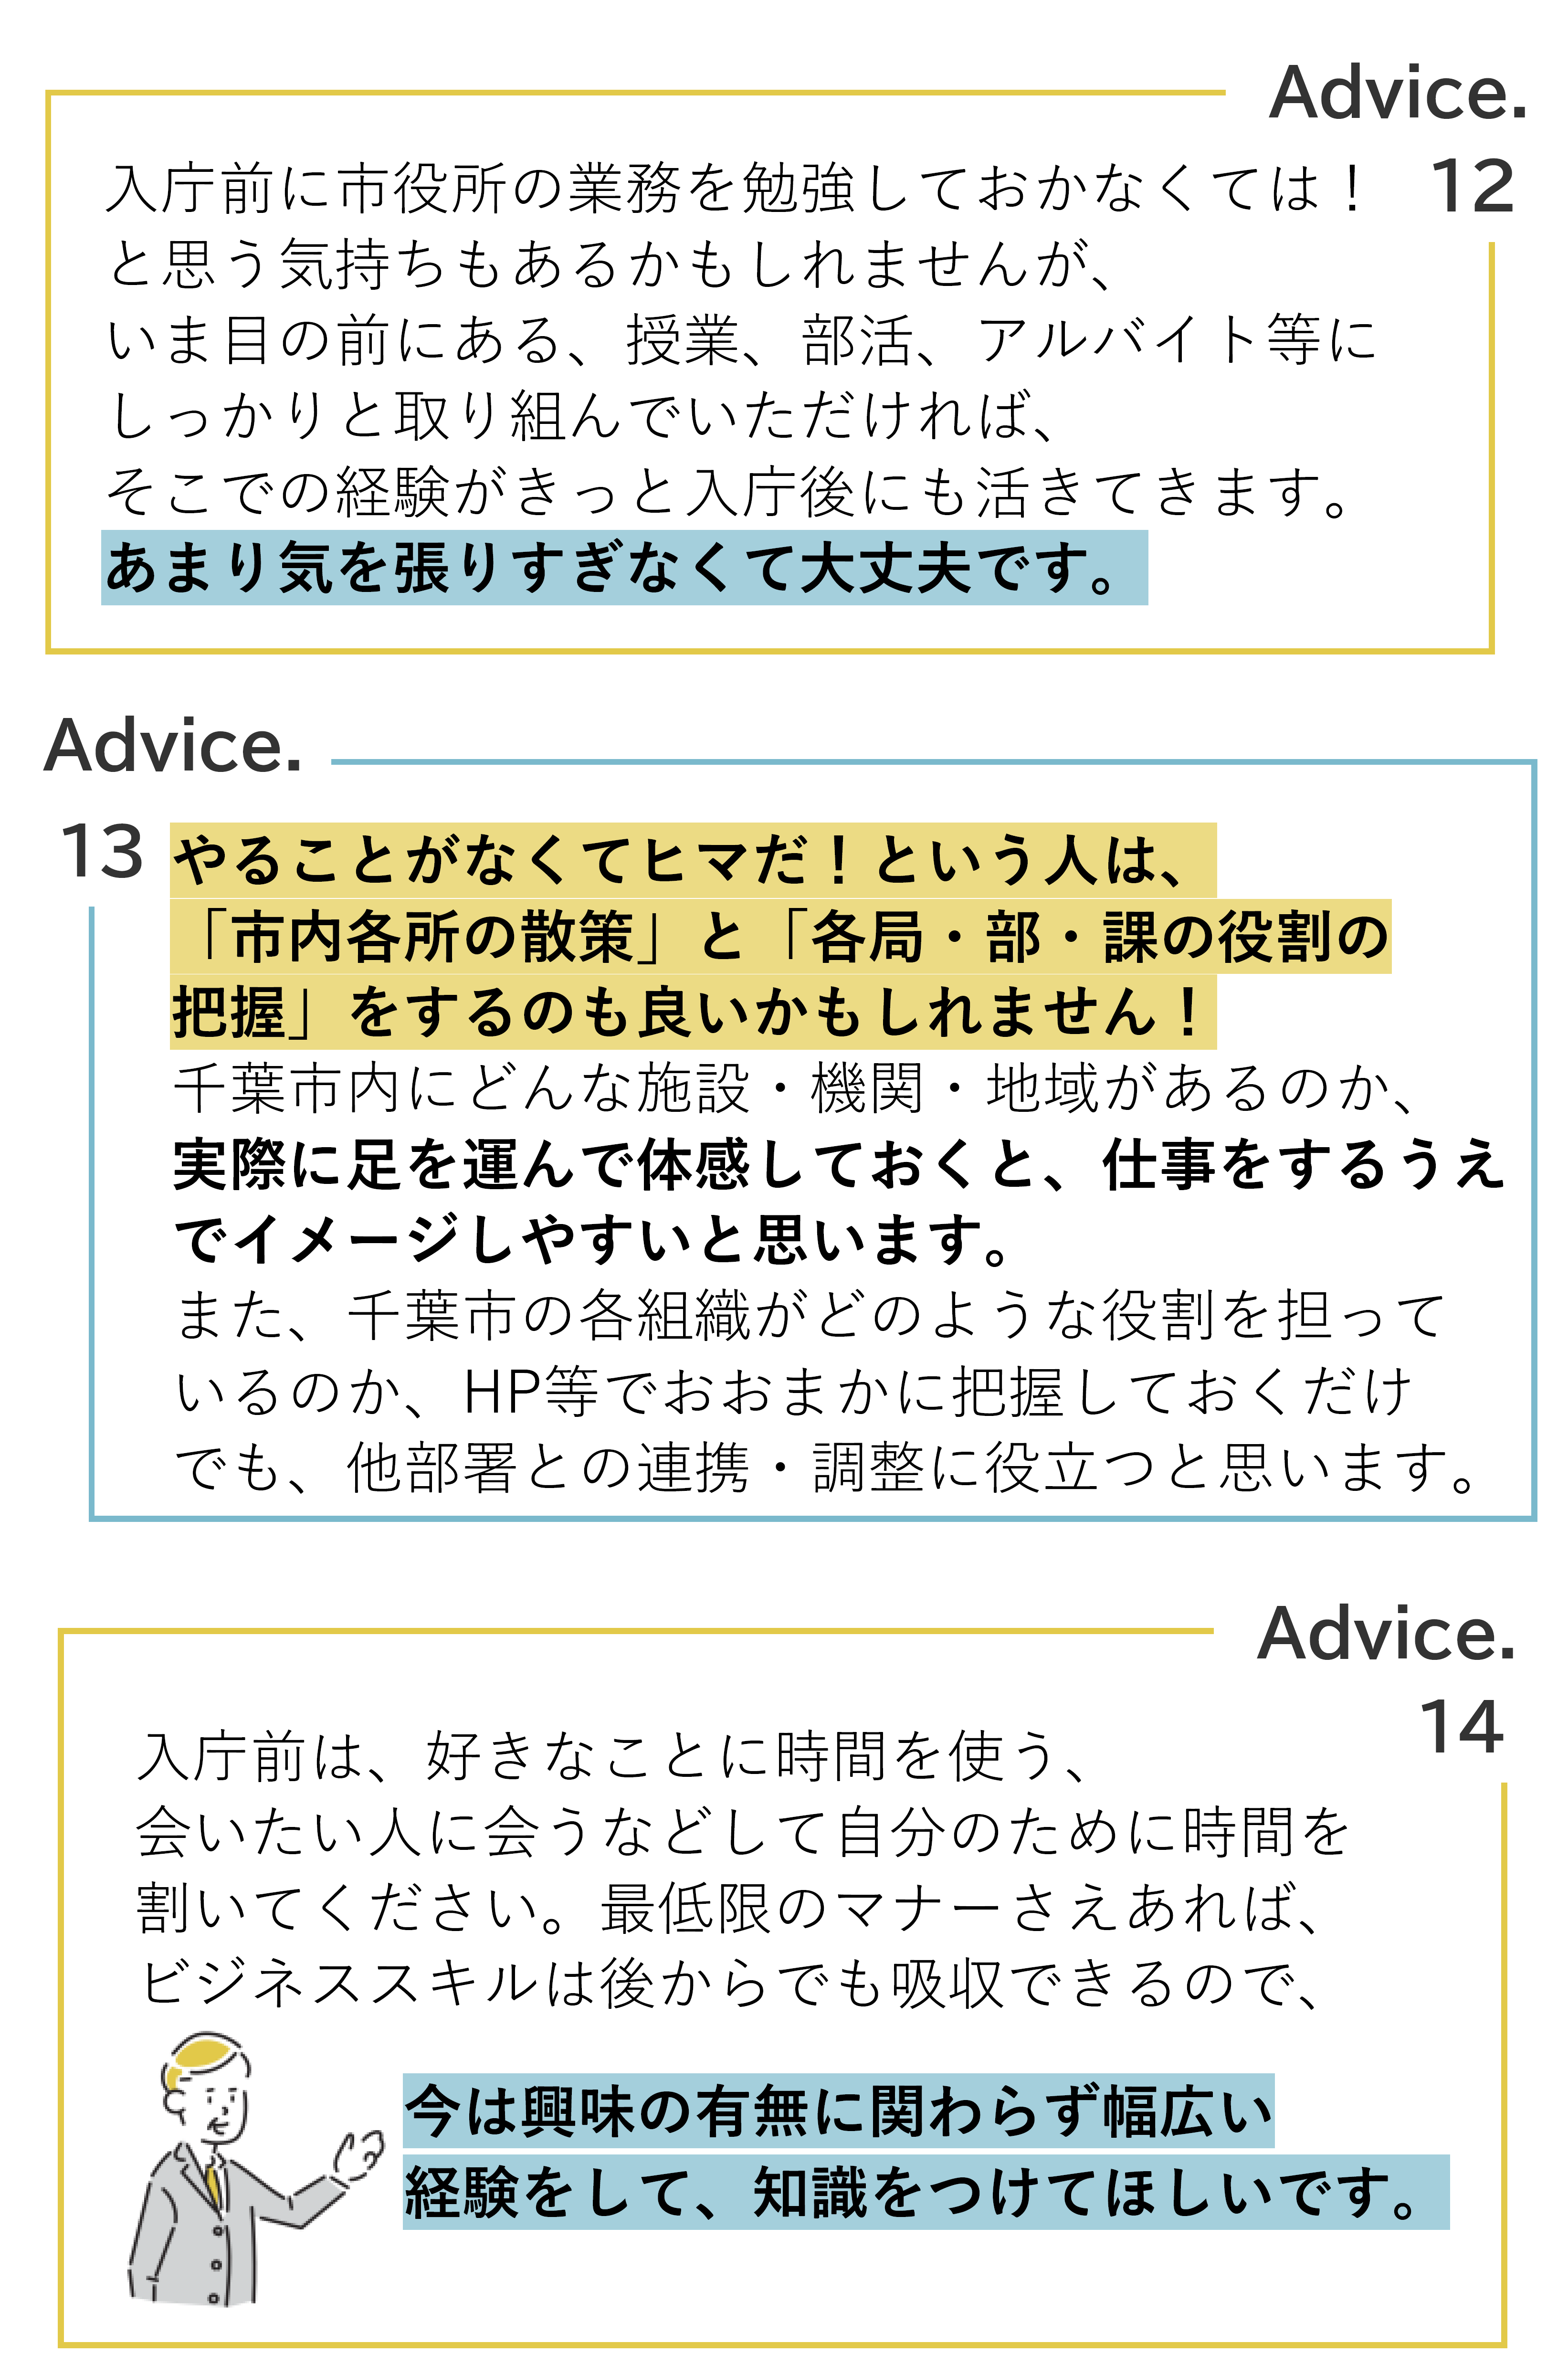 advice-06